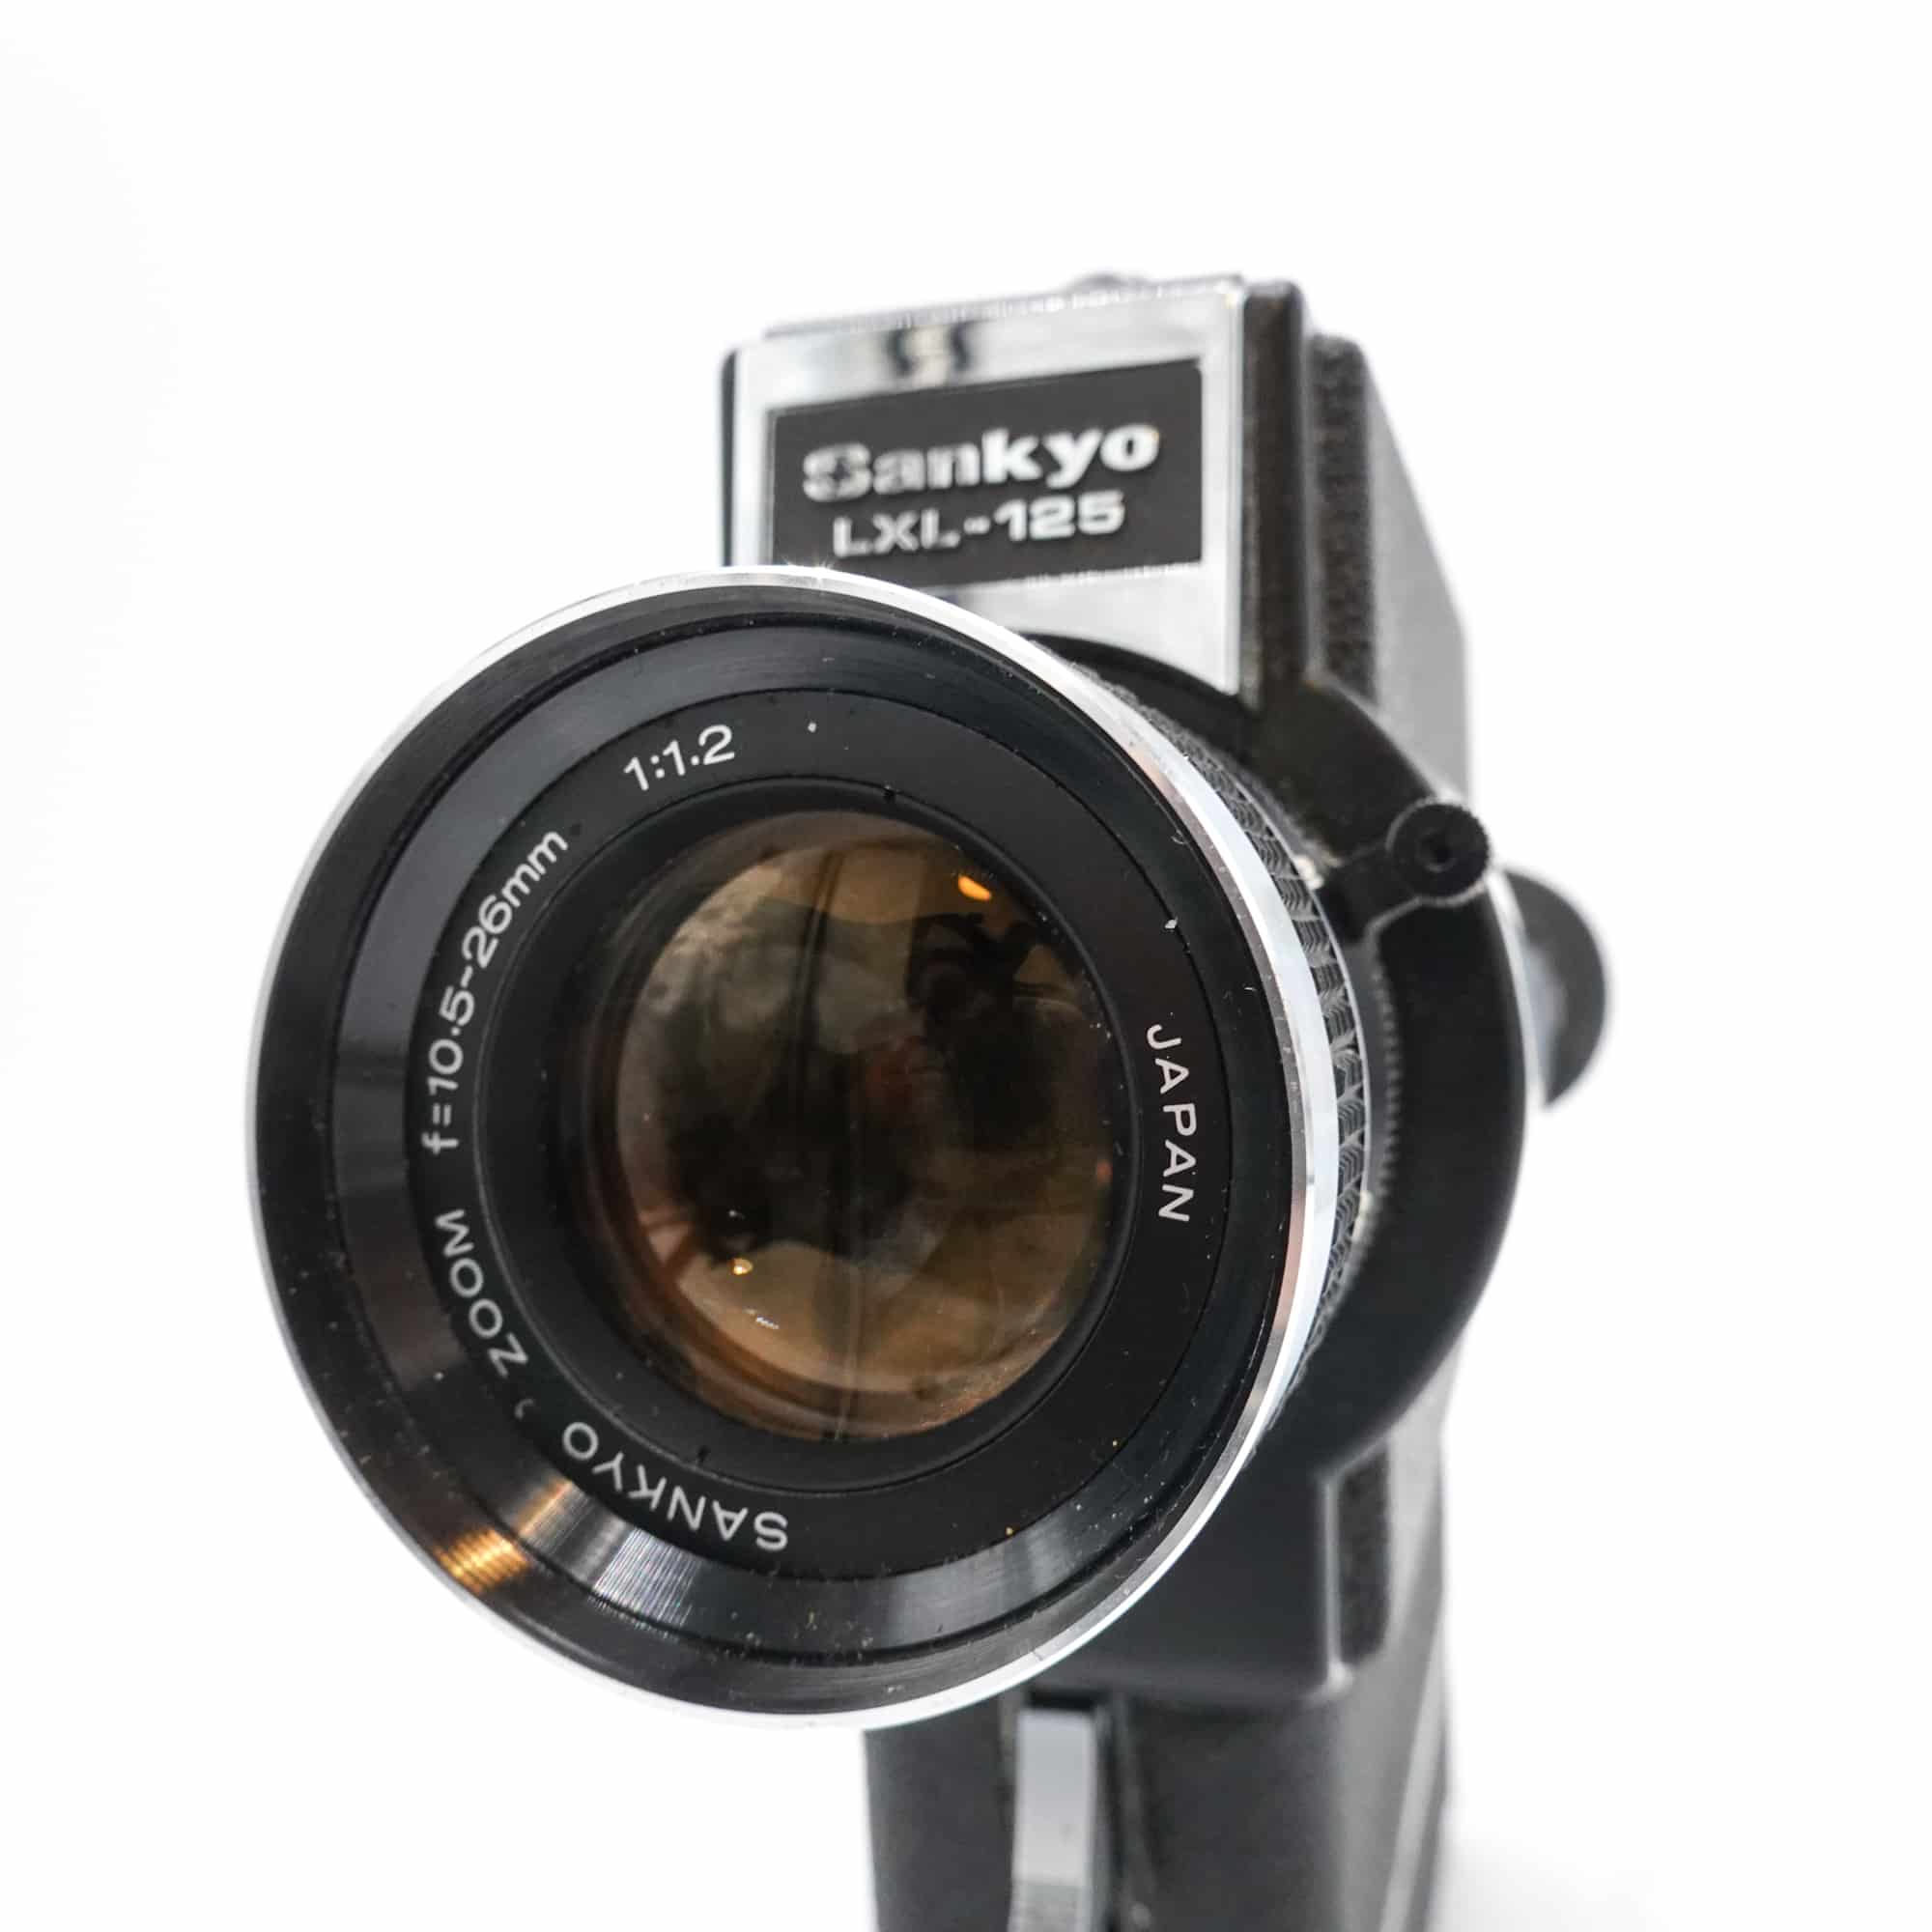 Sankyo LXL 125 Super 8 Camera